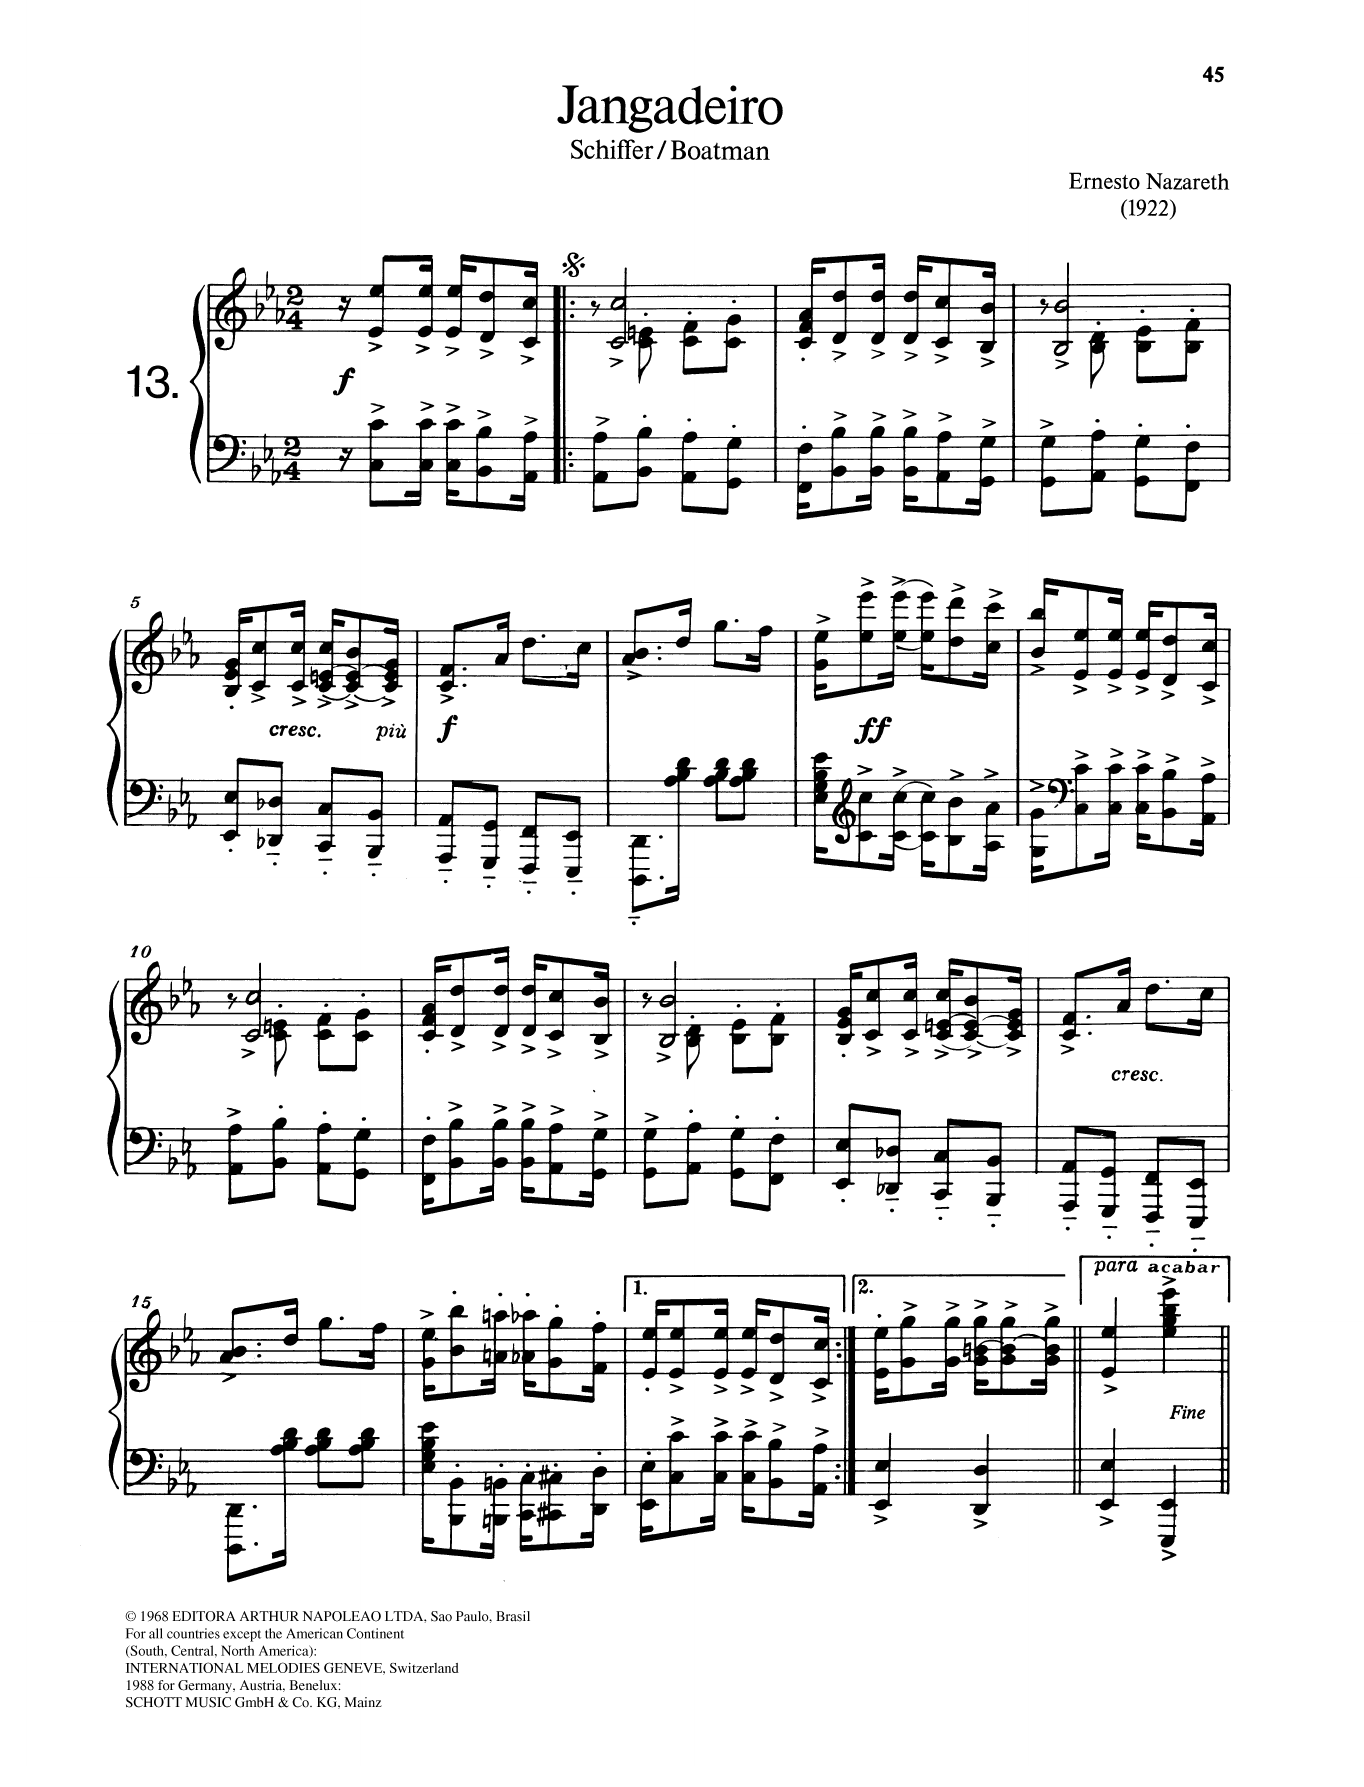 Ernesto Nazareth Jangadeiro Sheet Music Notes & Chords for Piano Solo - Download or Print PDF